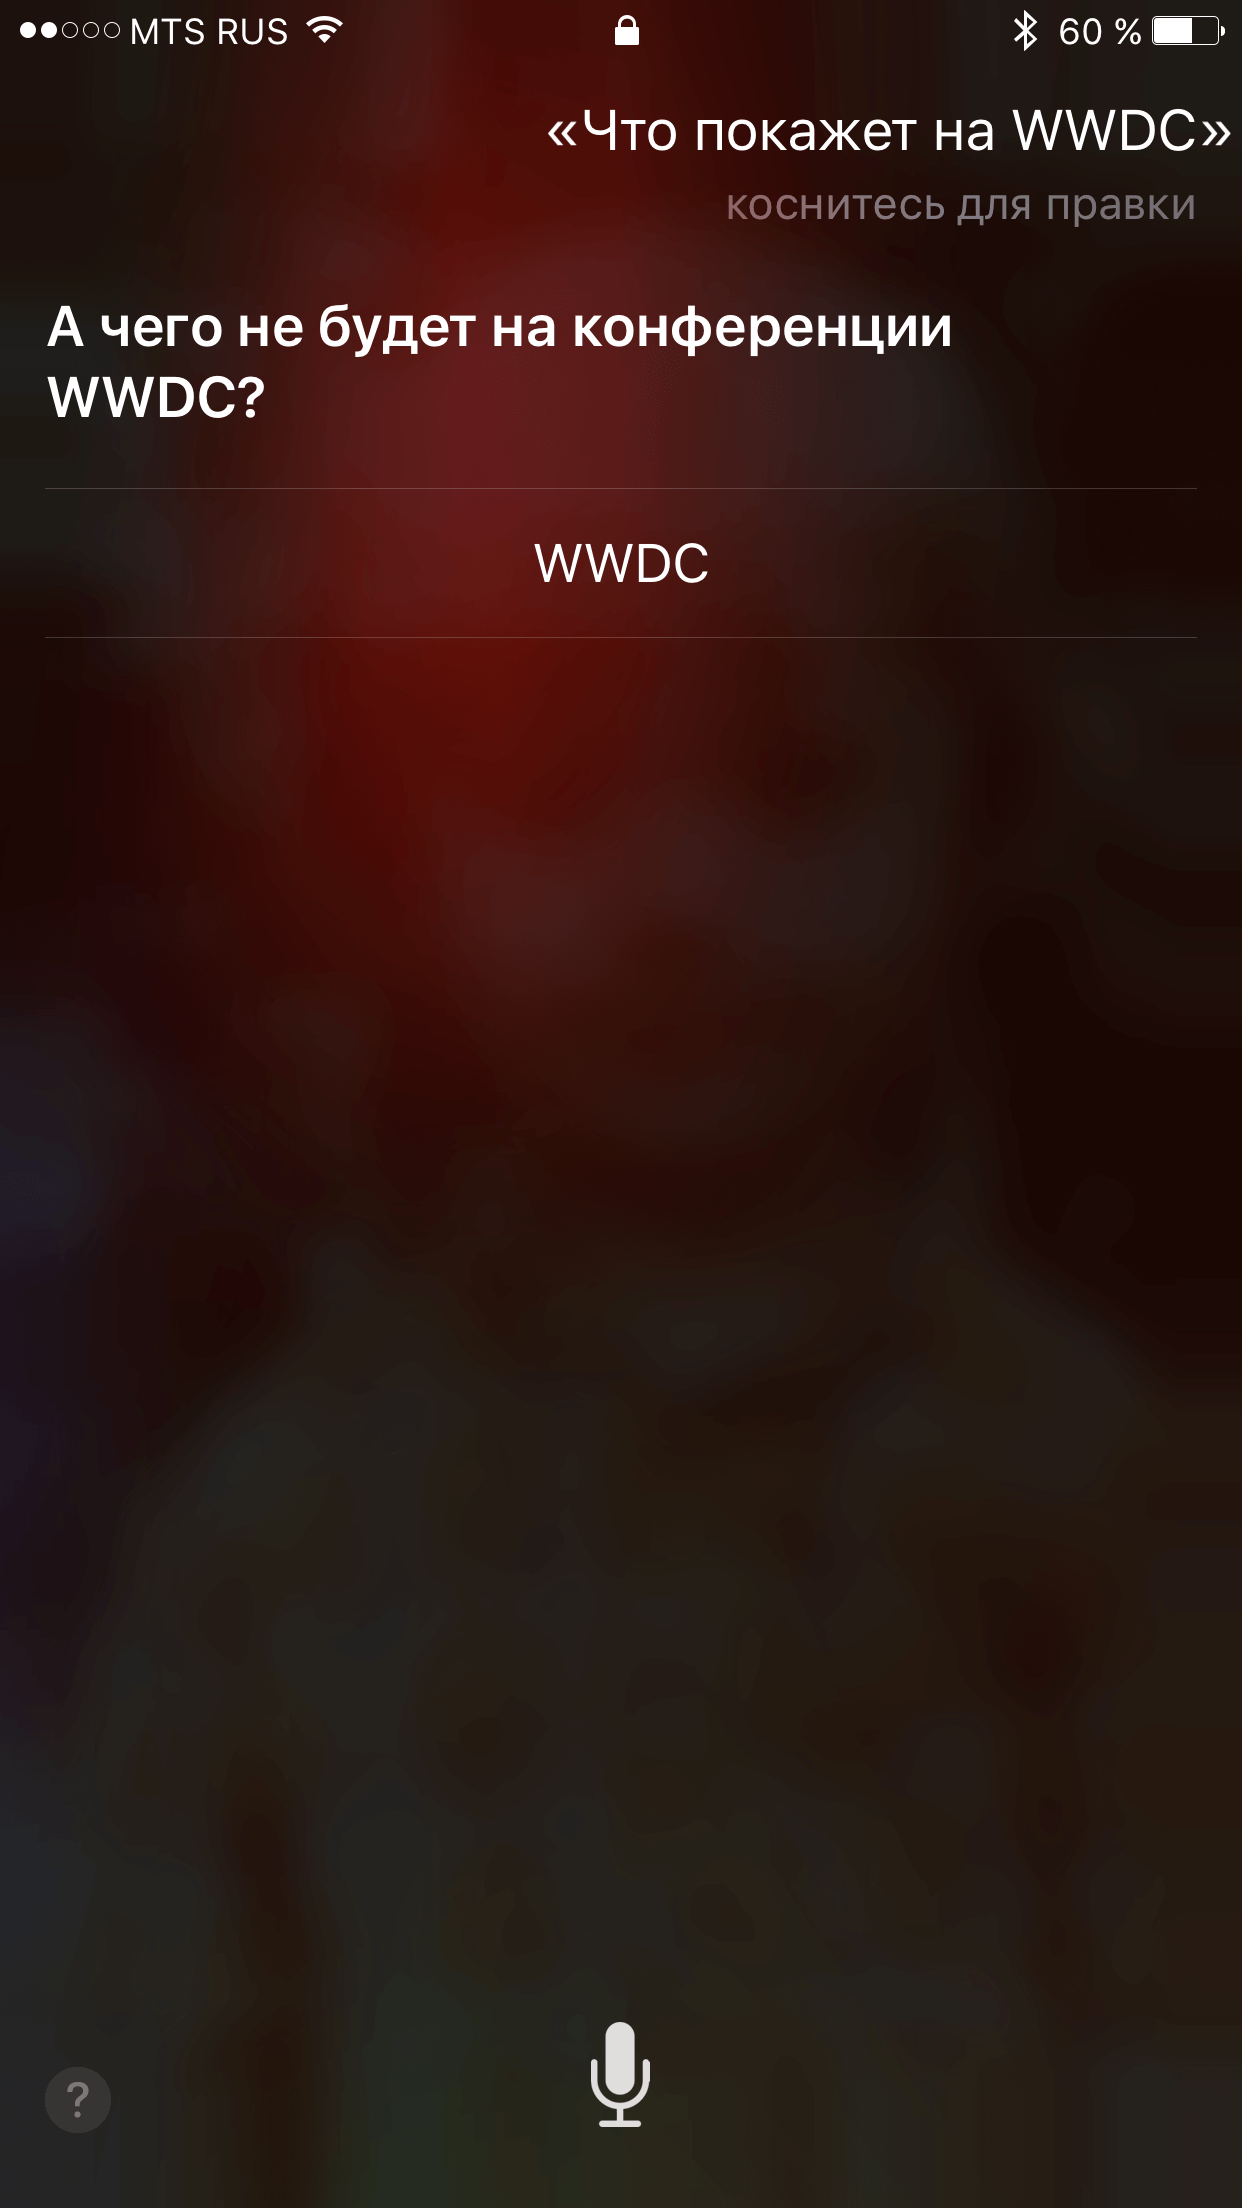 Что покажут на WWDC 2017? Отвечает Siri. Фото.